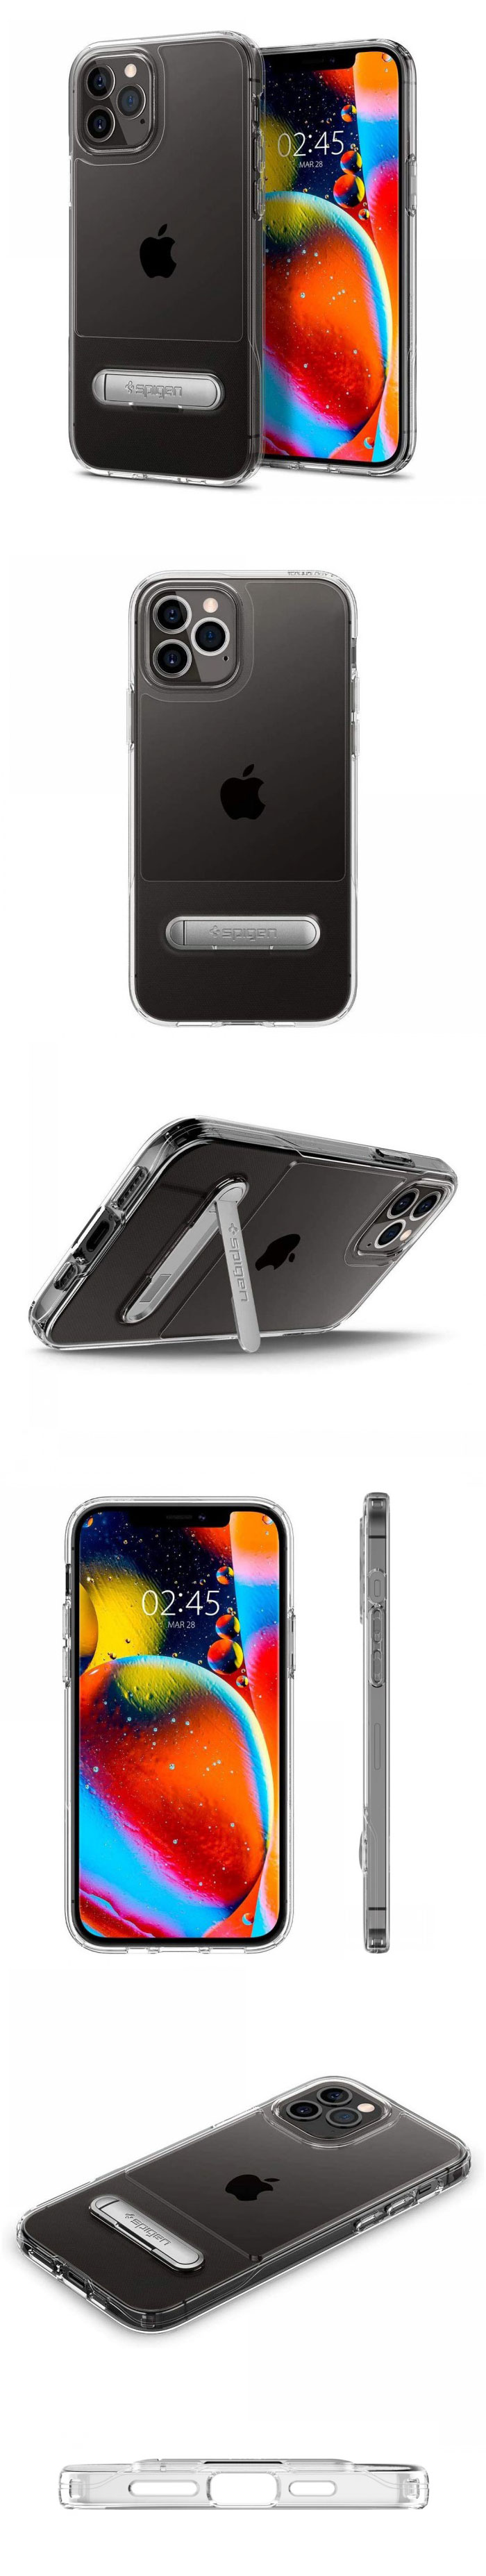 Ốp lưng iPhone 12 Pro Max Spigen Slim Armor Essential S 33